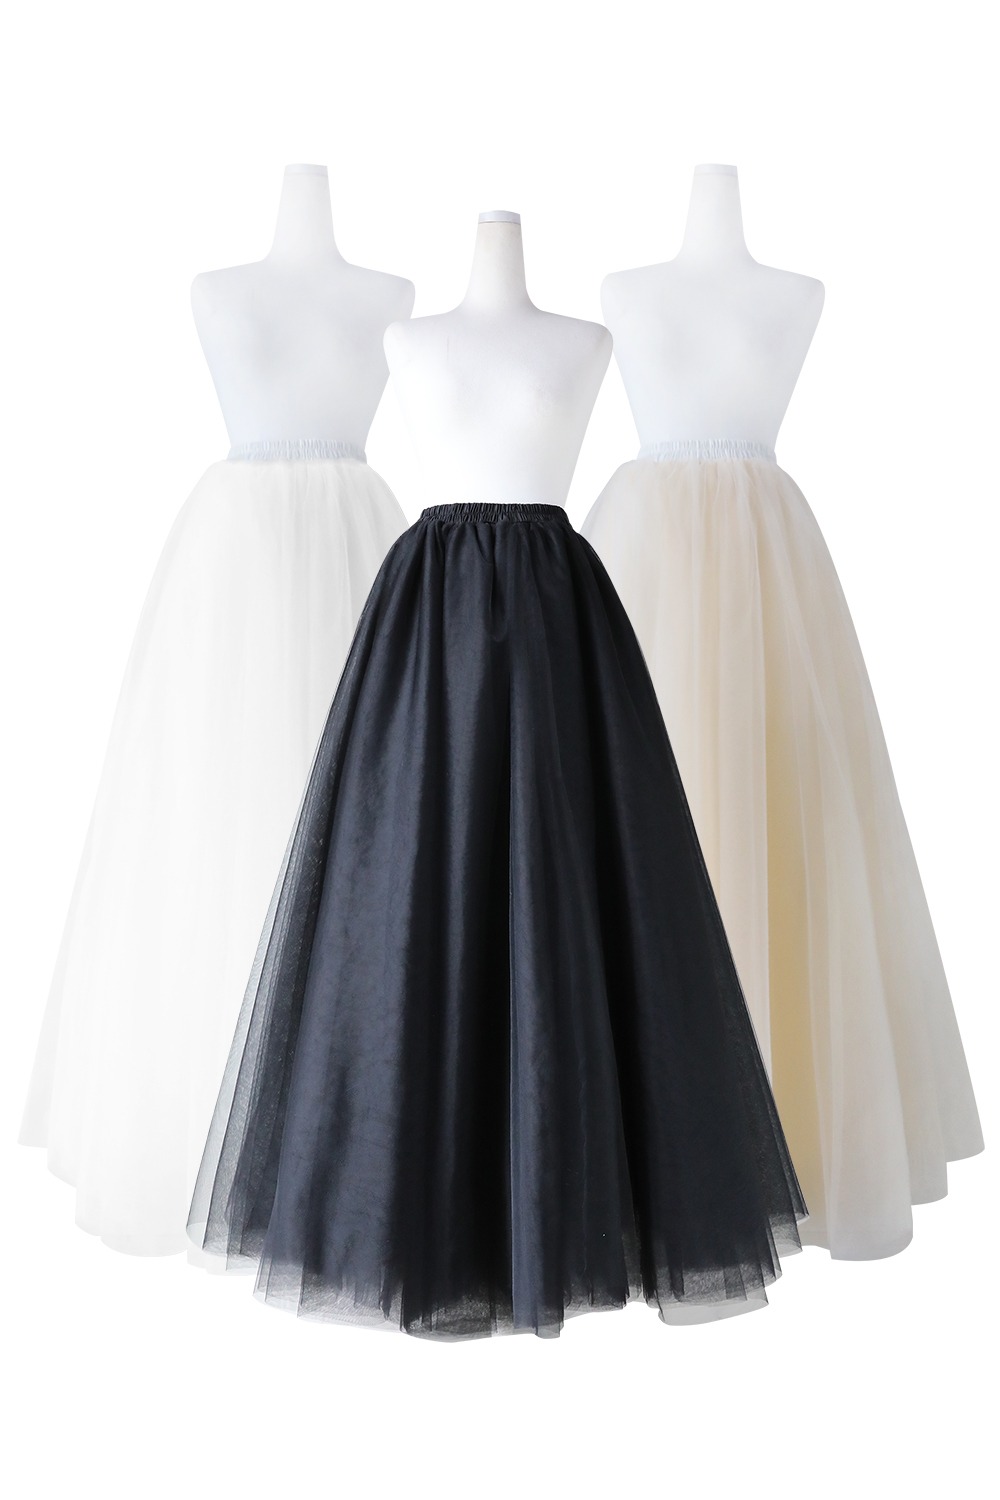 7layer tull skirt hanbok petticoat [3 types]